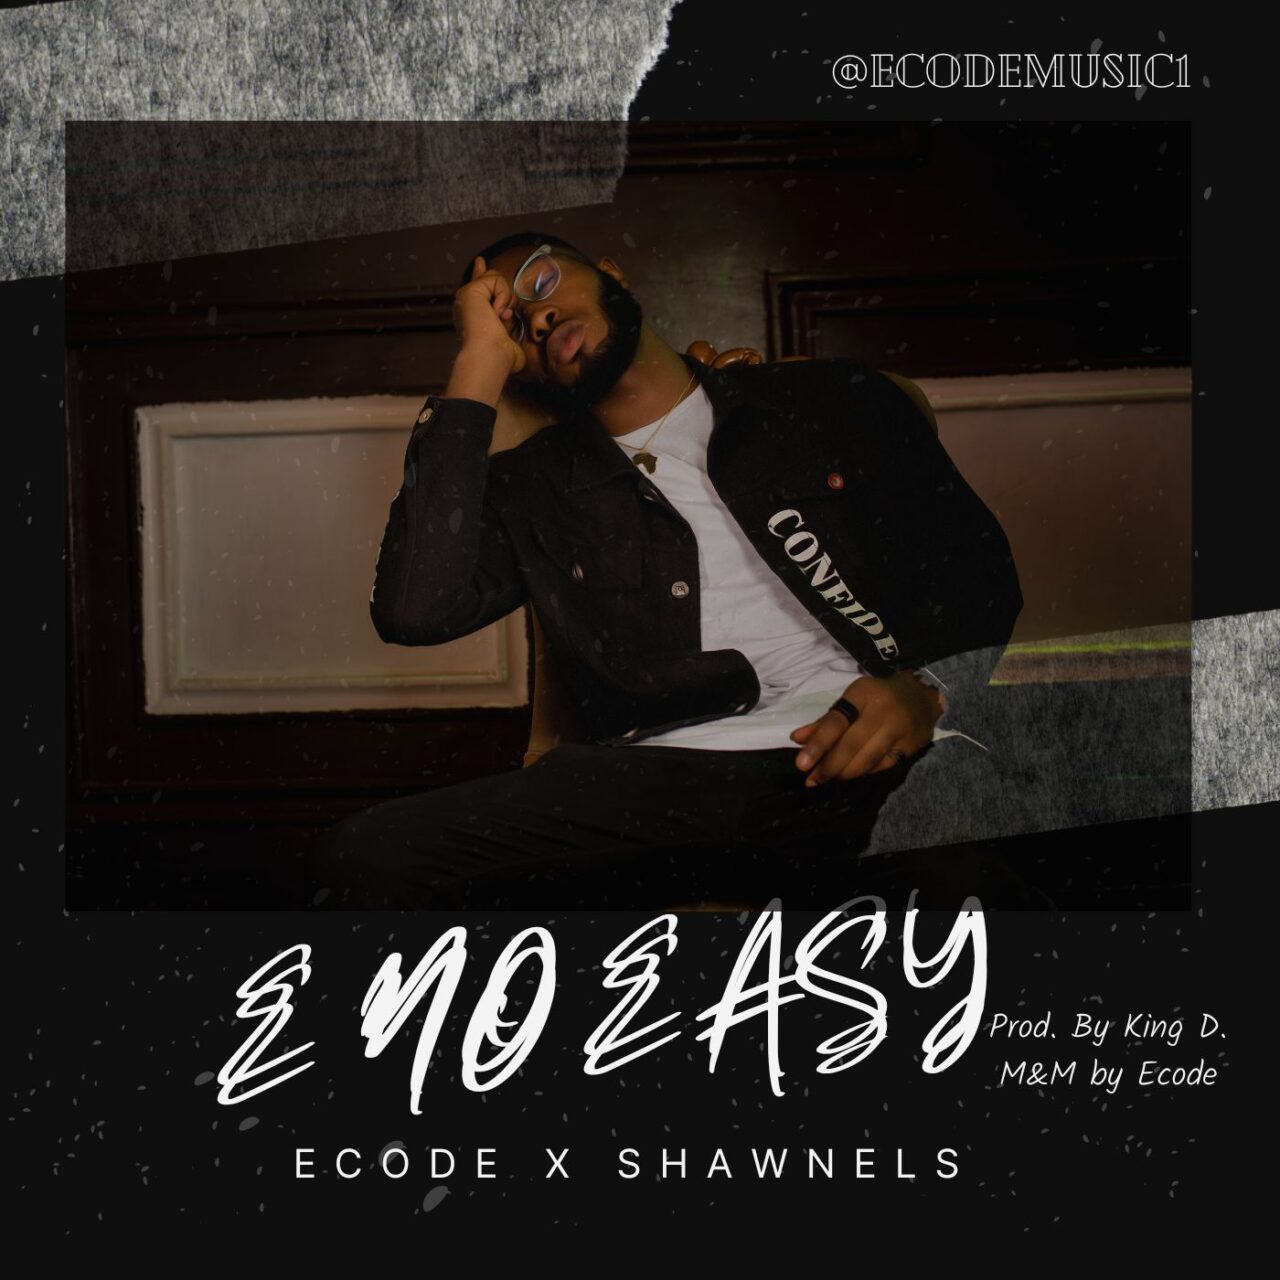 Ecode - E no Eazy Ft. Shawnels